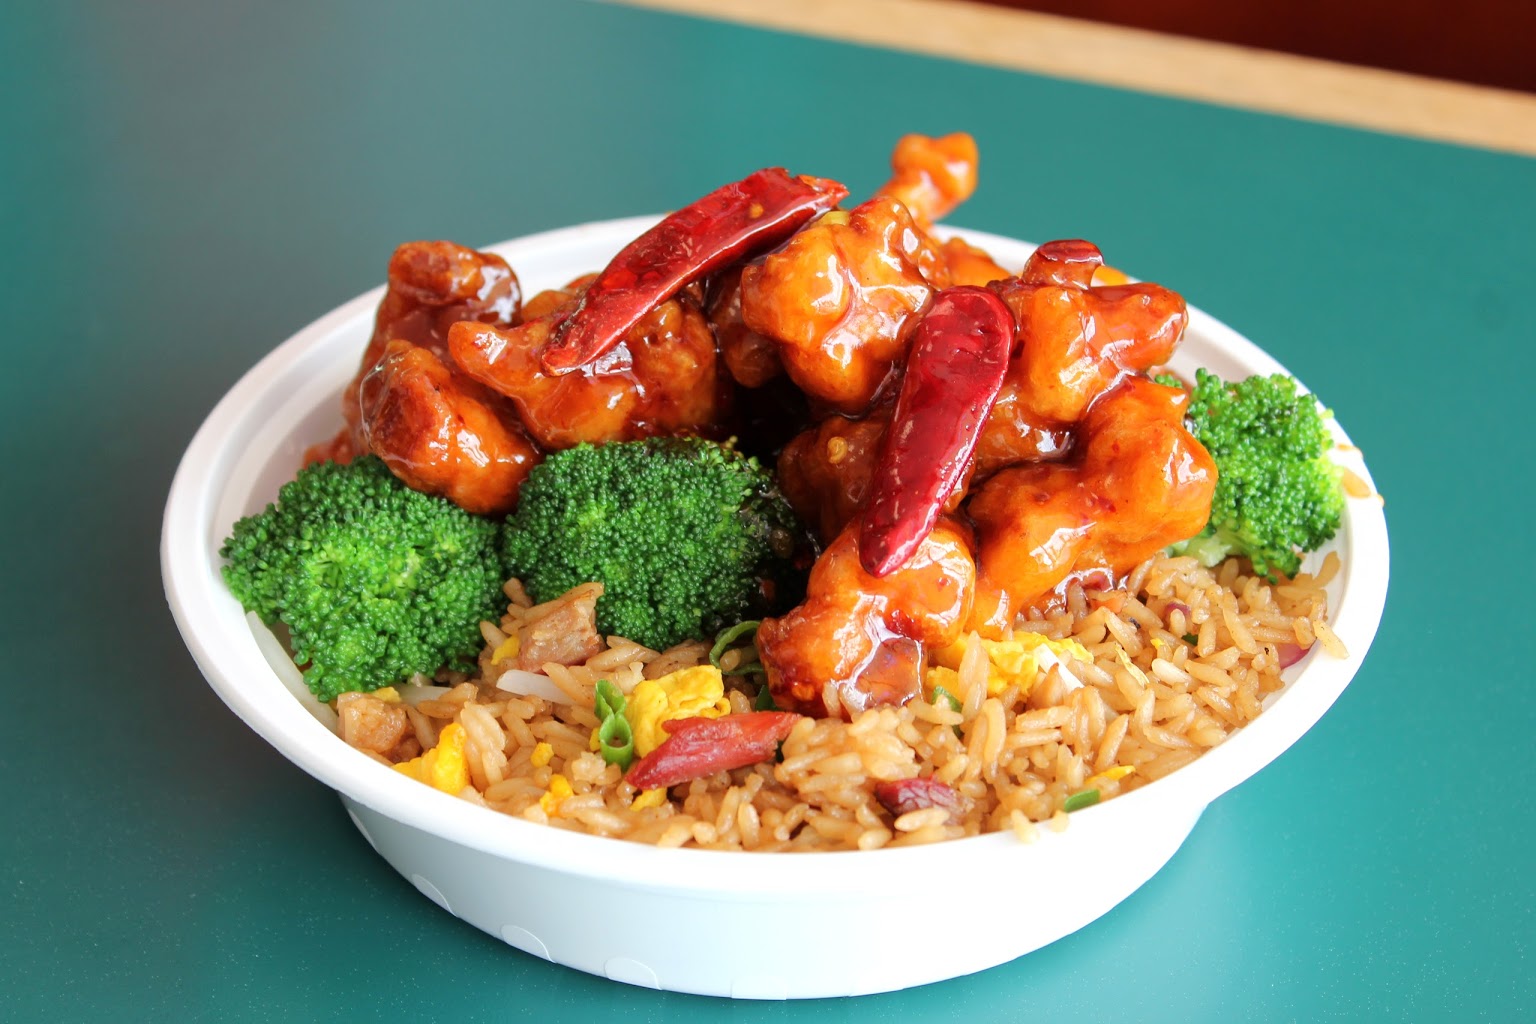 fried rice and general tso's chicken at King Wong Chinese Restaurant, Marlton, NJ